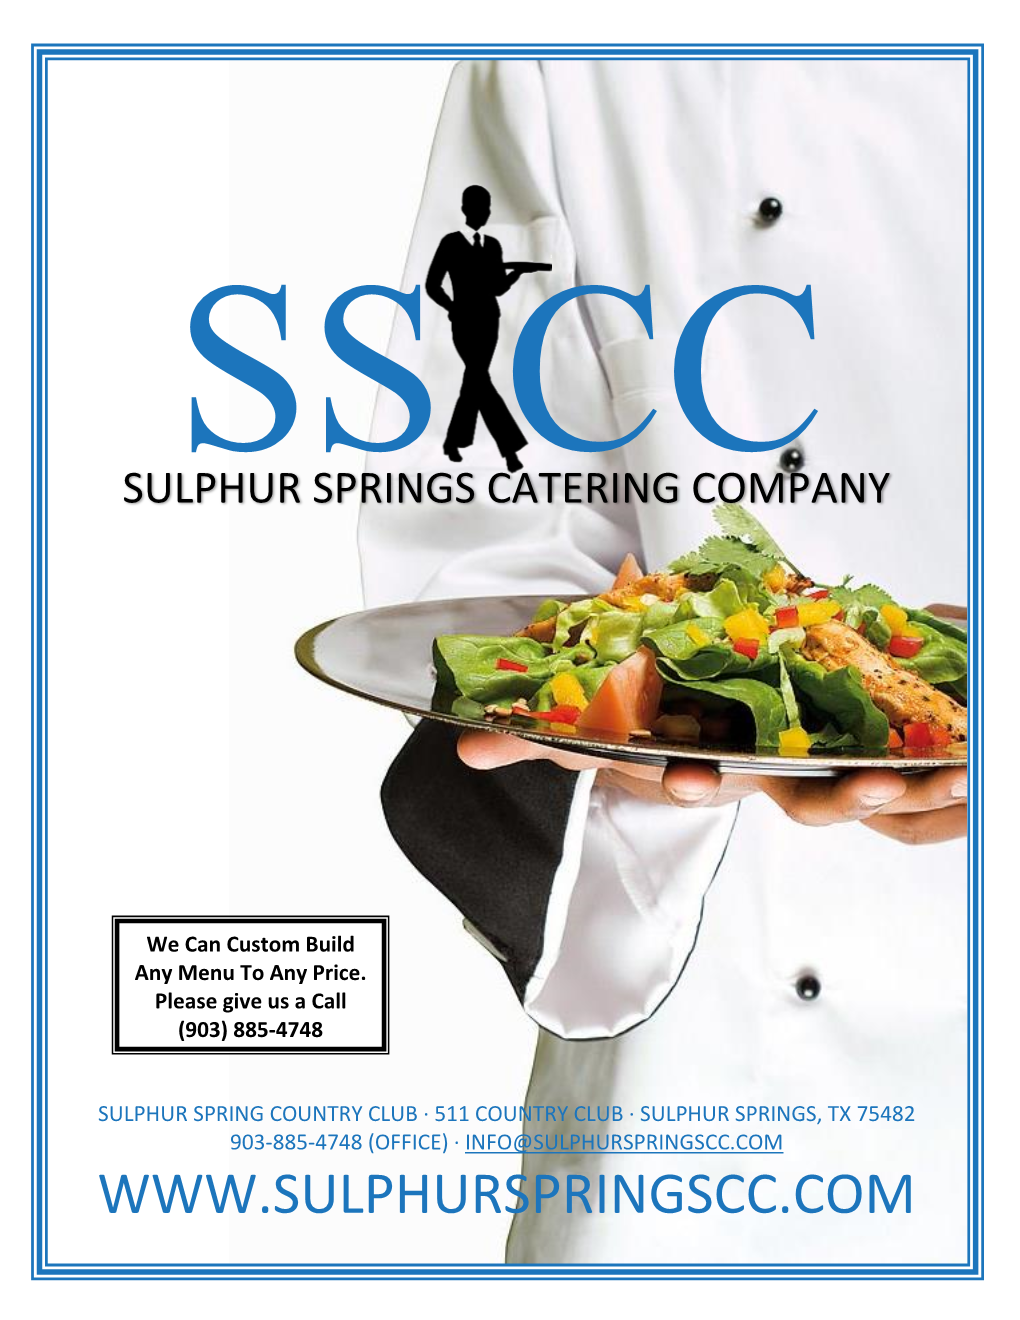 Sulphur Springs Catering Company